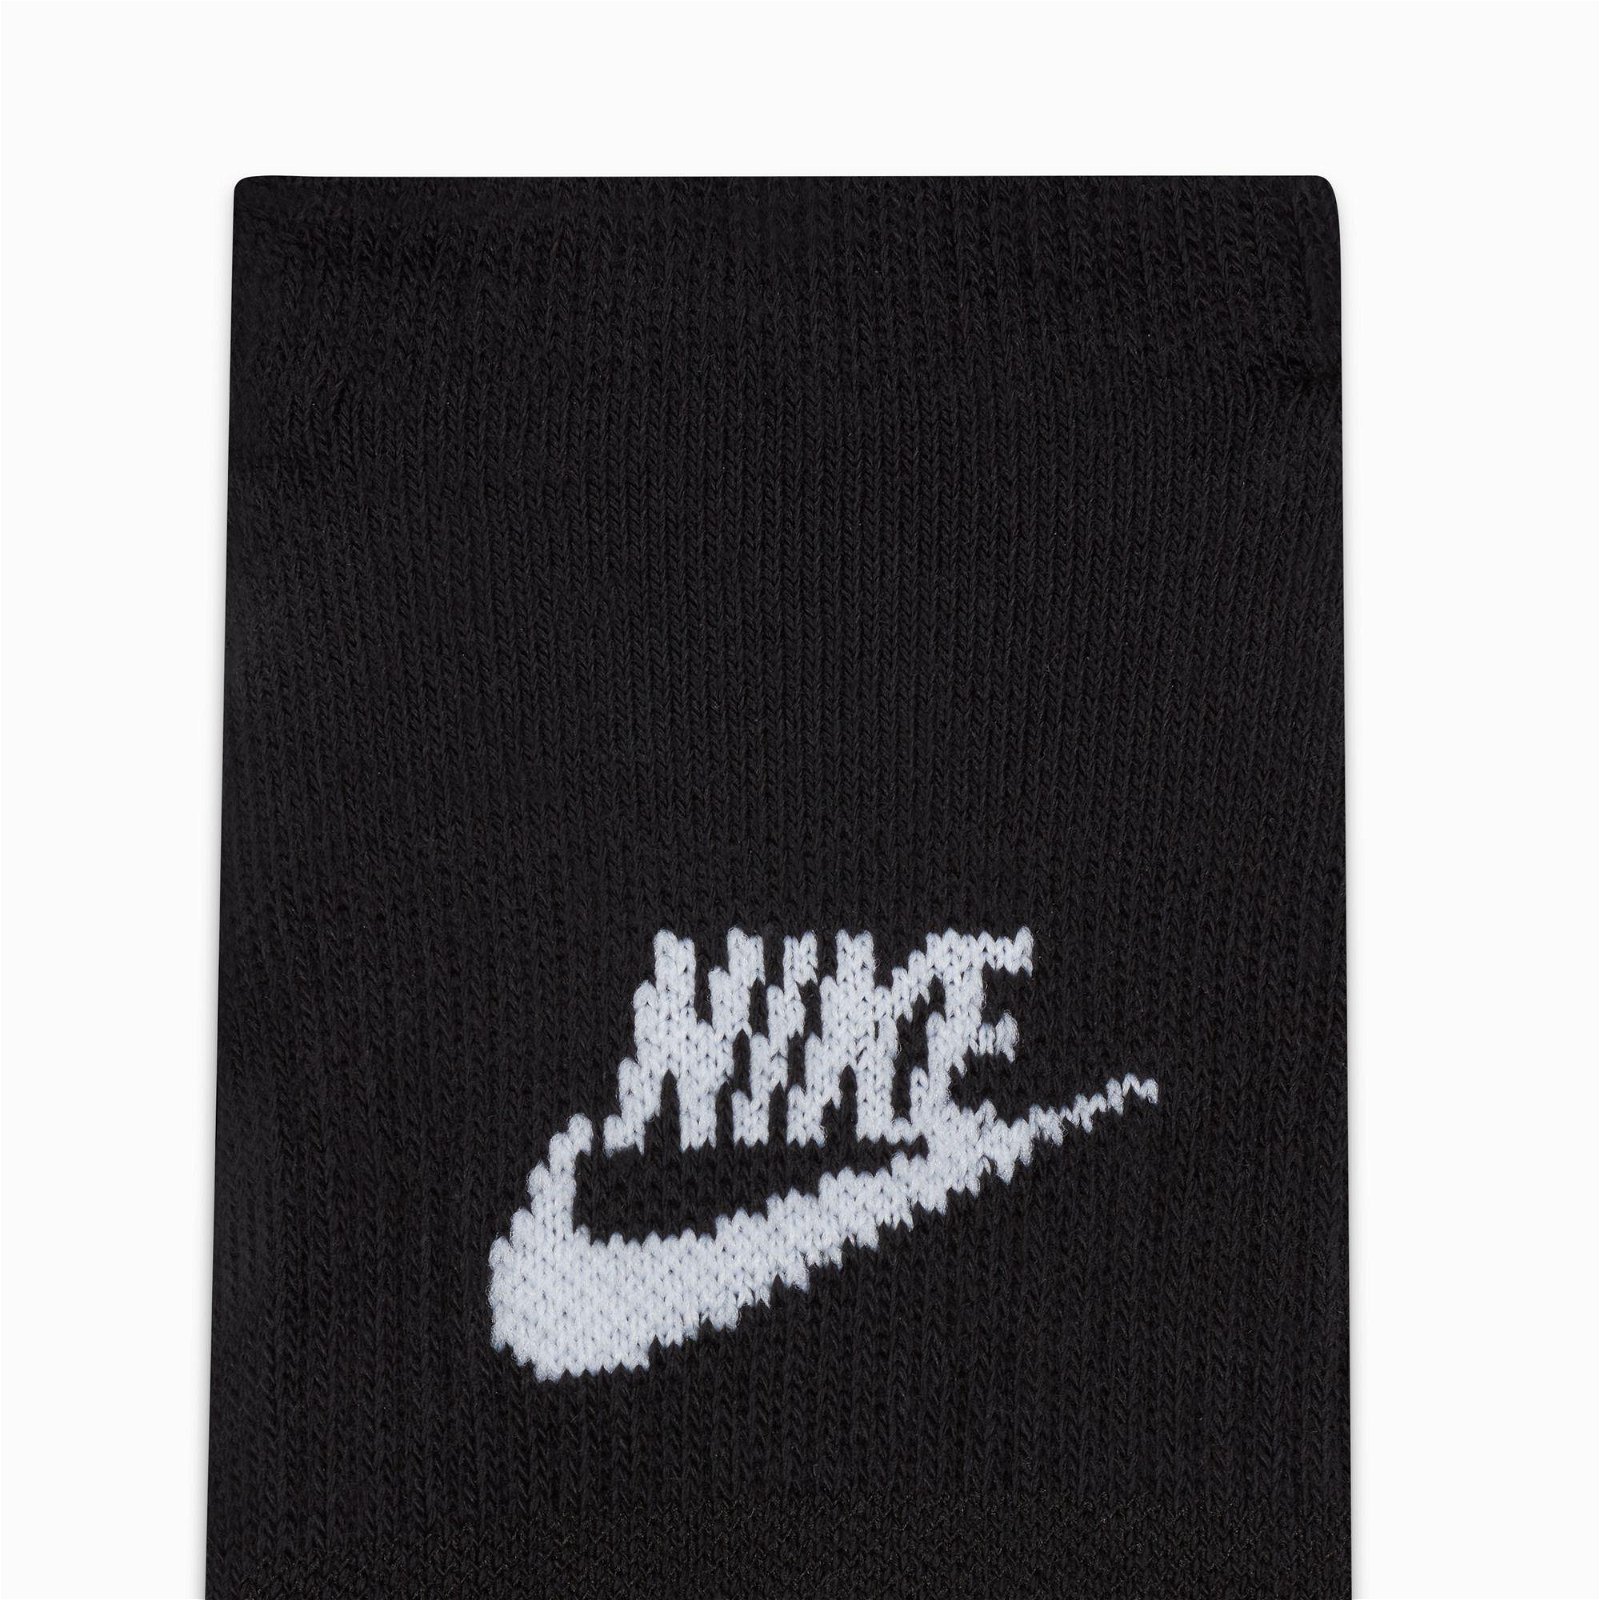 Nike Evryday Plus Cush Footie Unisex Siyah Çorap